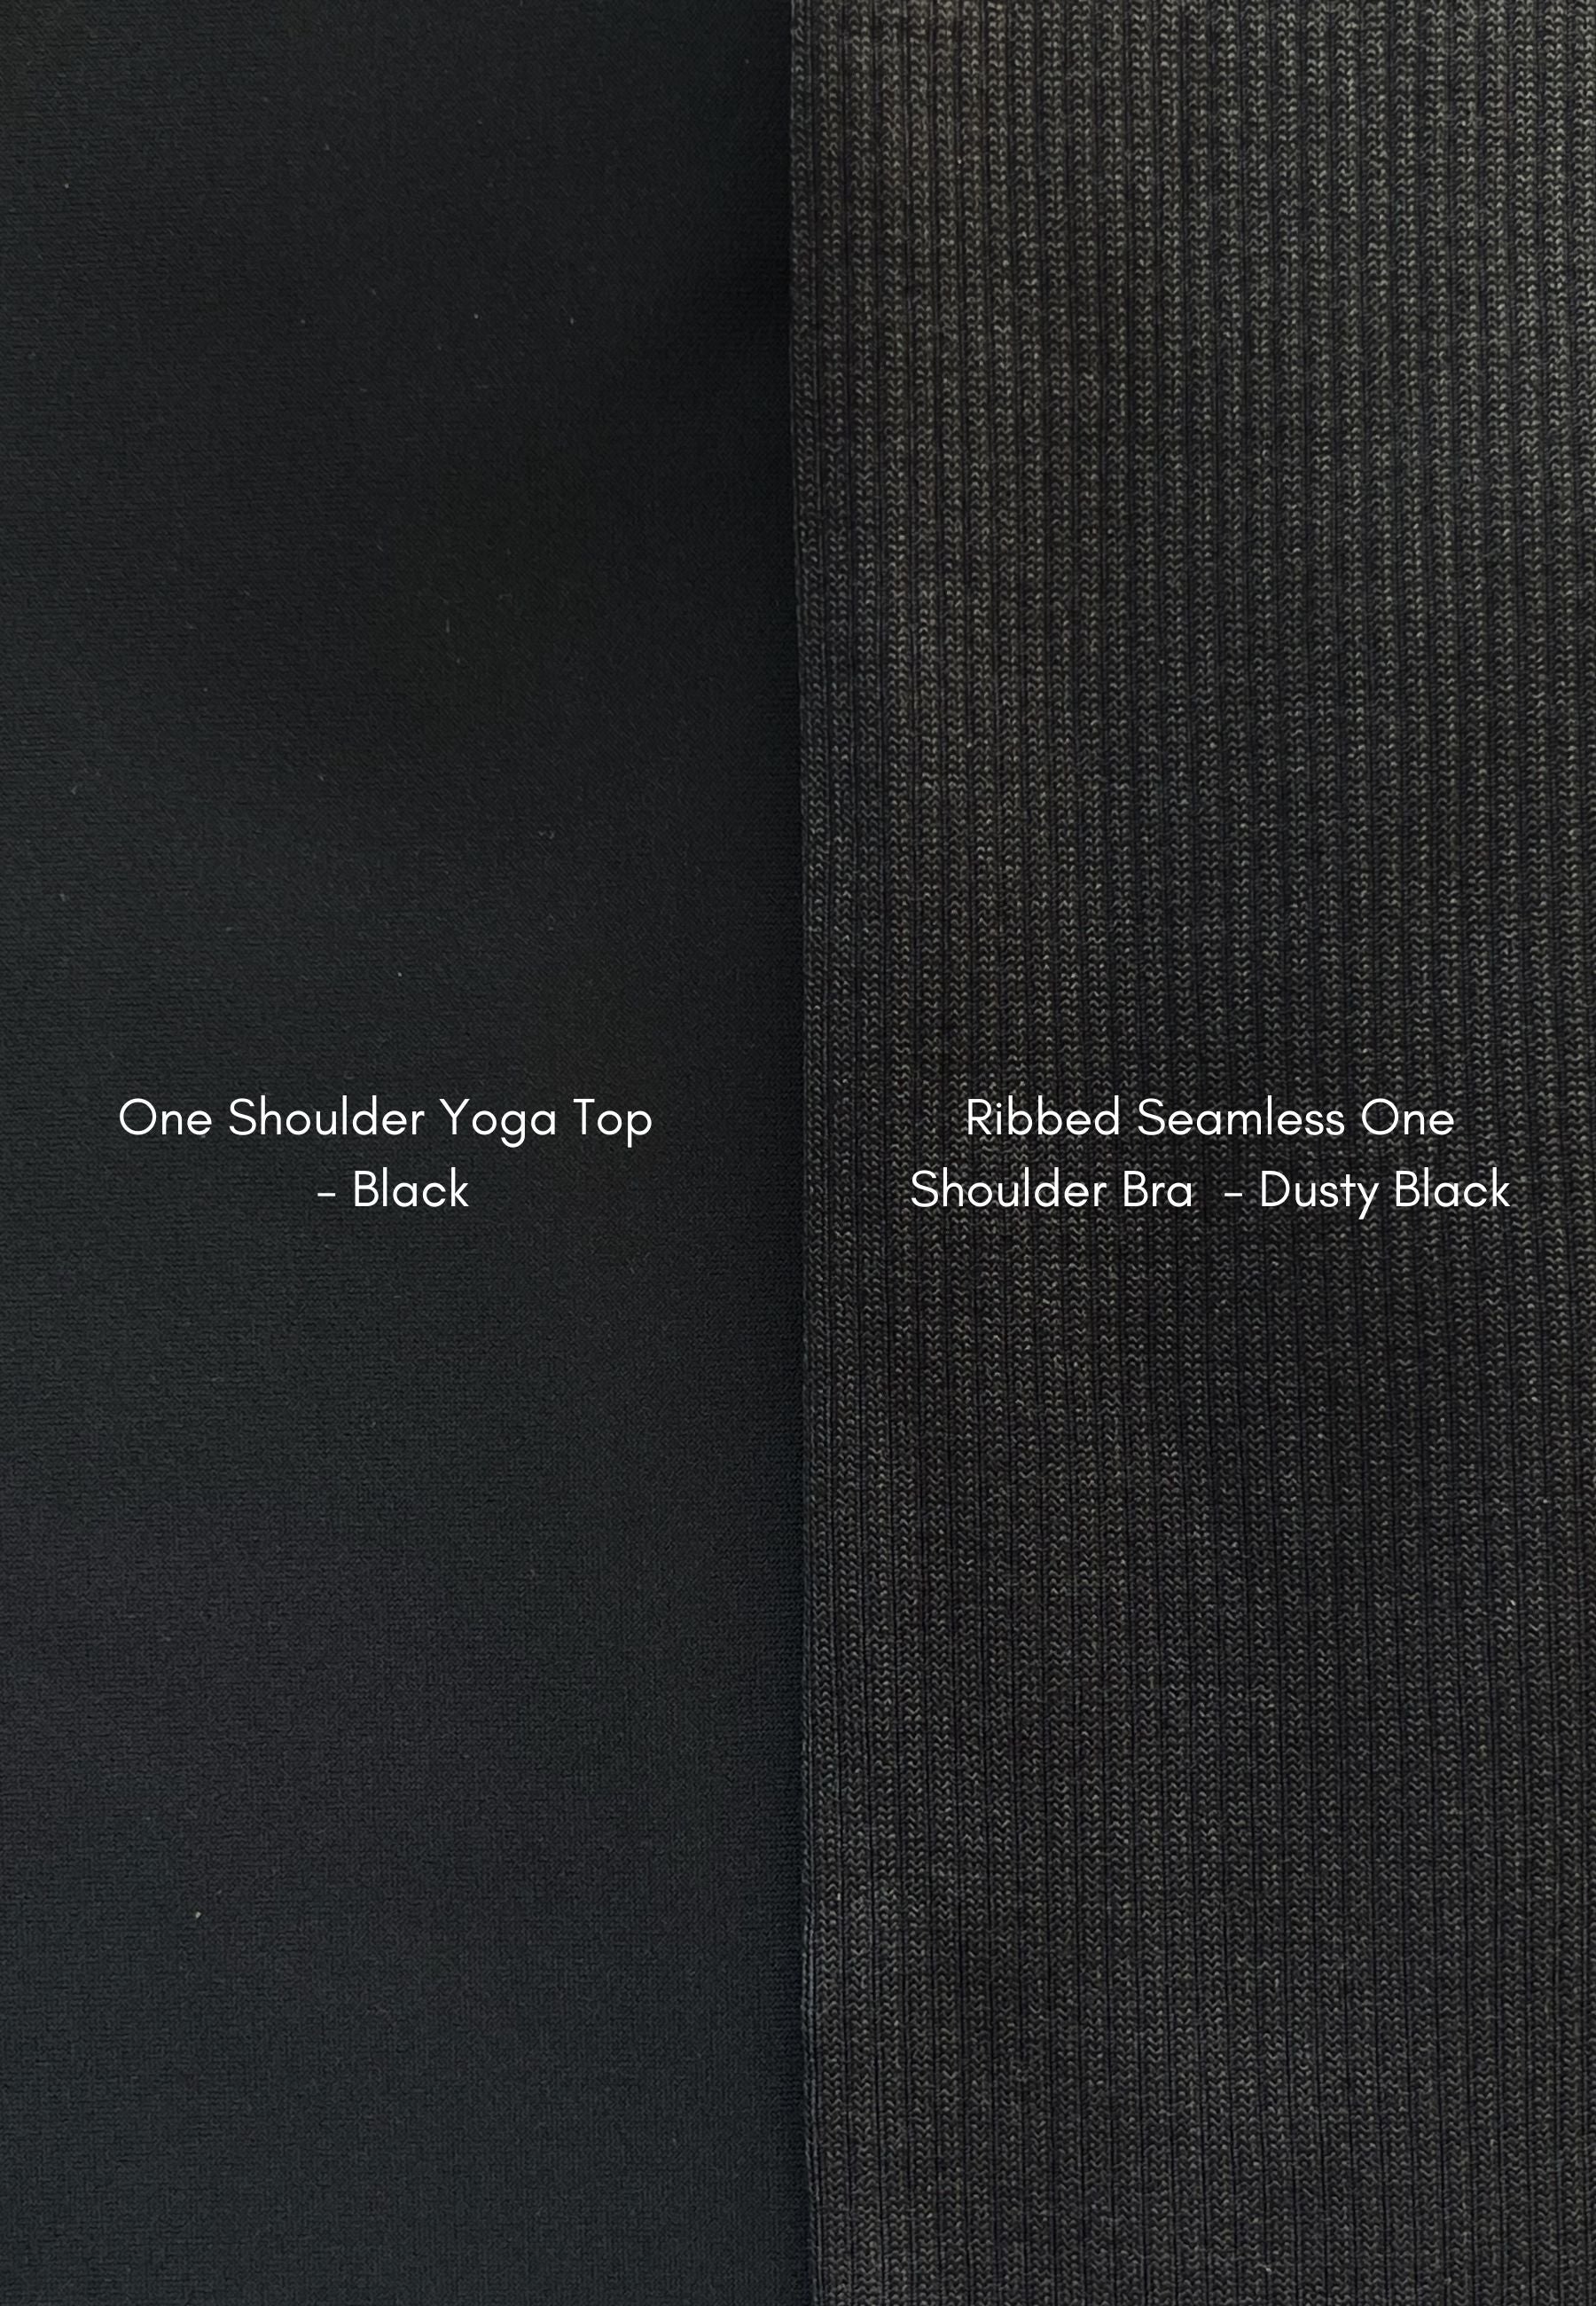 Ribbes Seamless One Shoulder Bra - Dusty Black Color description